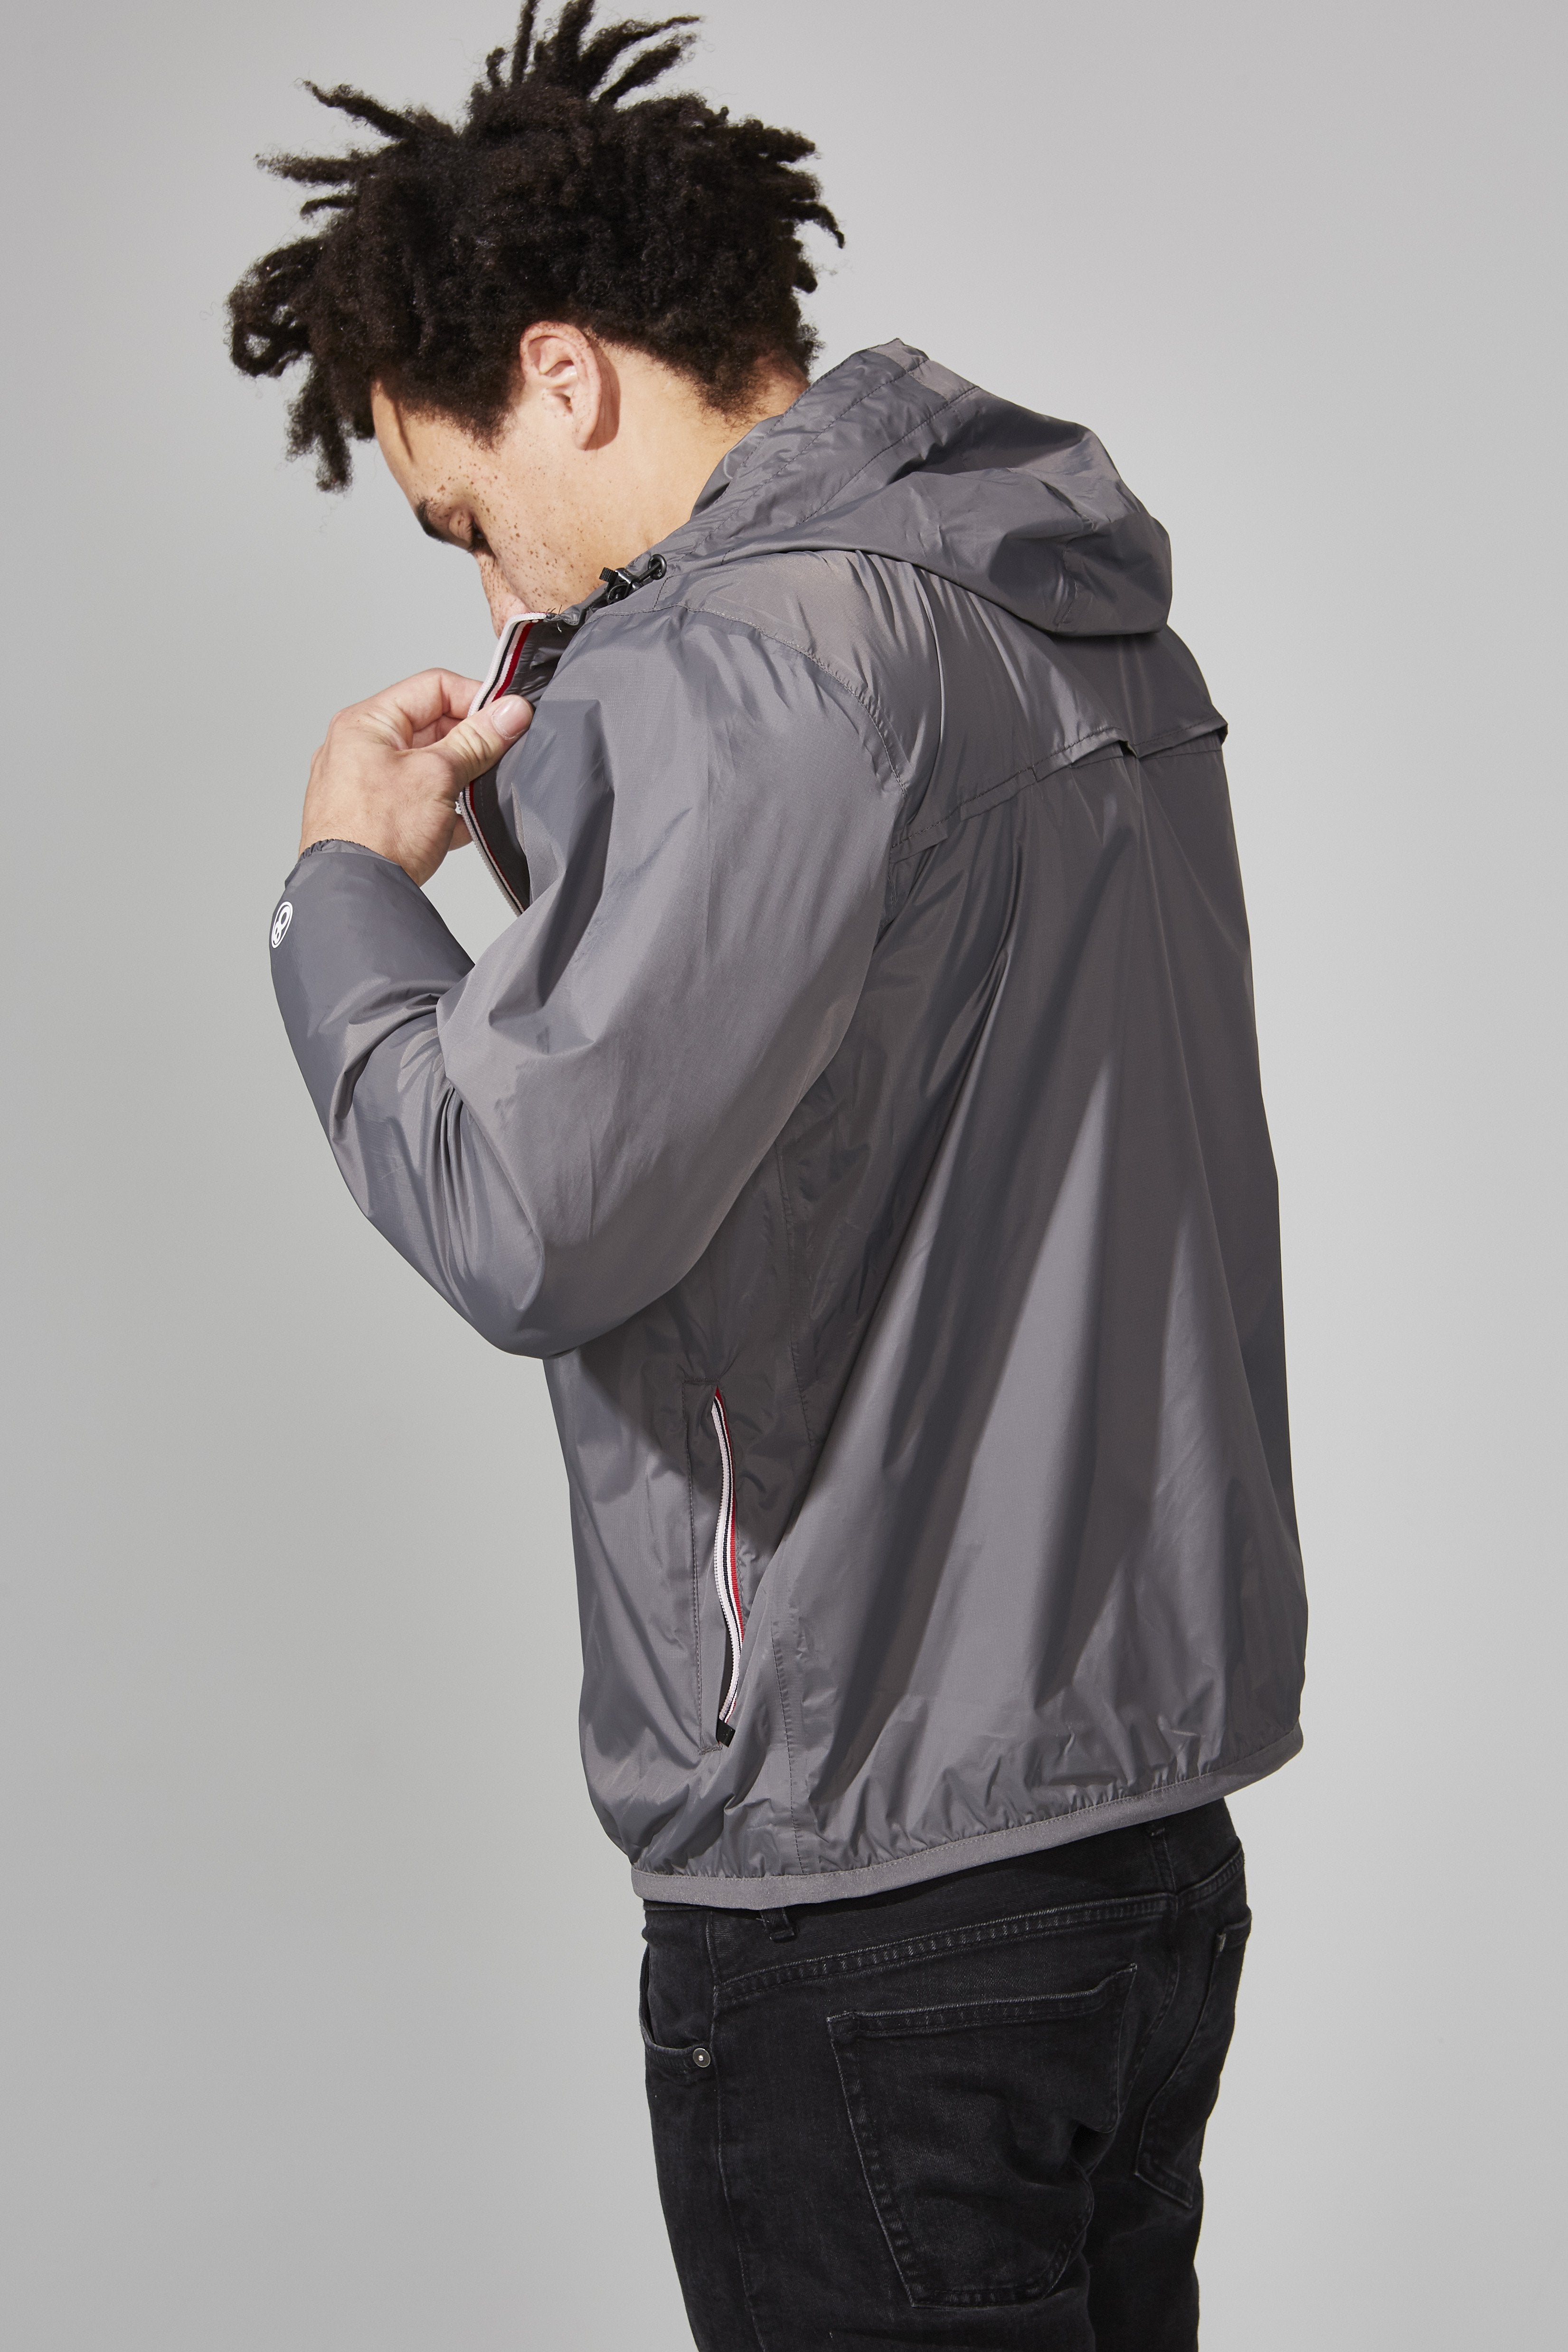 Max - Grey Full Zip Packable Rain Jacket - O8lifestyle.